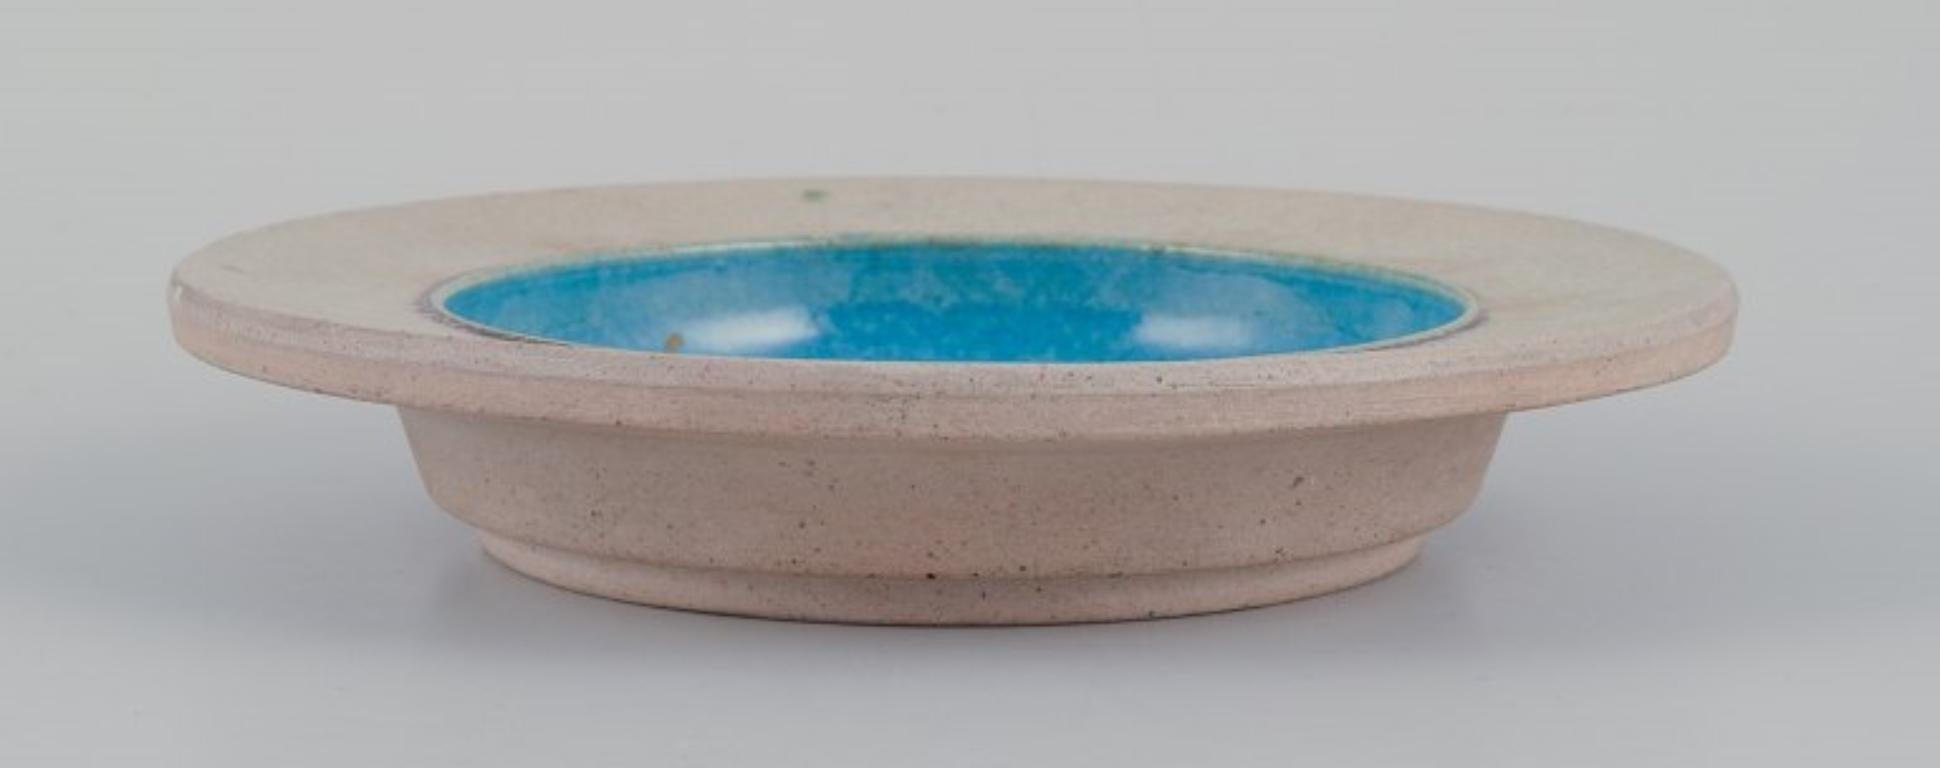 Scandinavian Modern Nils Kähler for Kähler. Three ceramic bowls. Sand-colored and turquoise glaze. For Sale